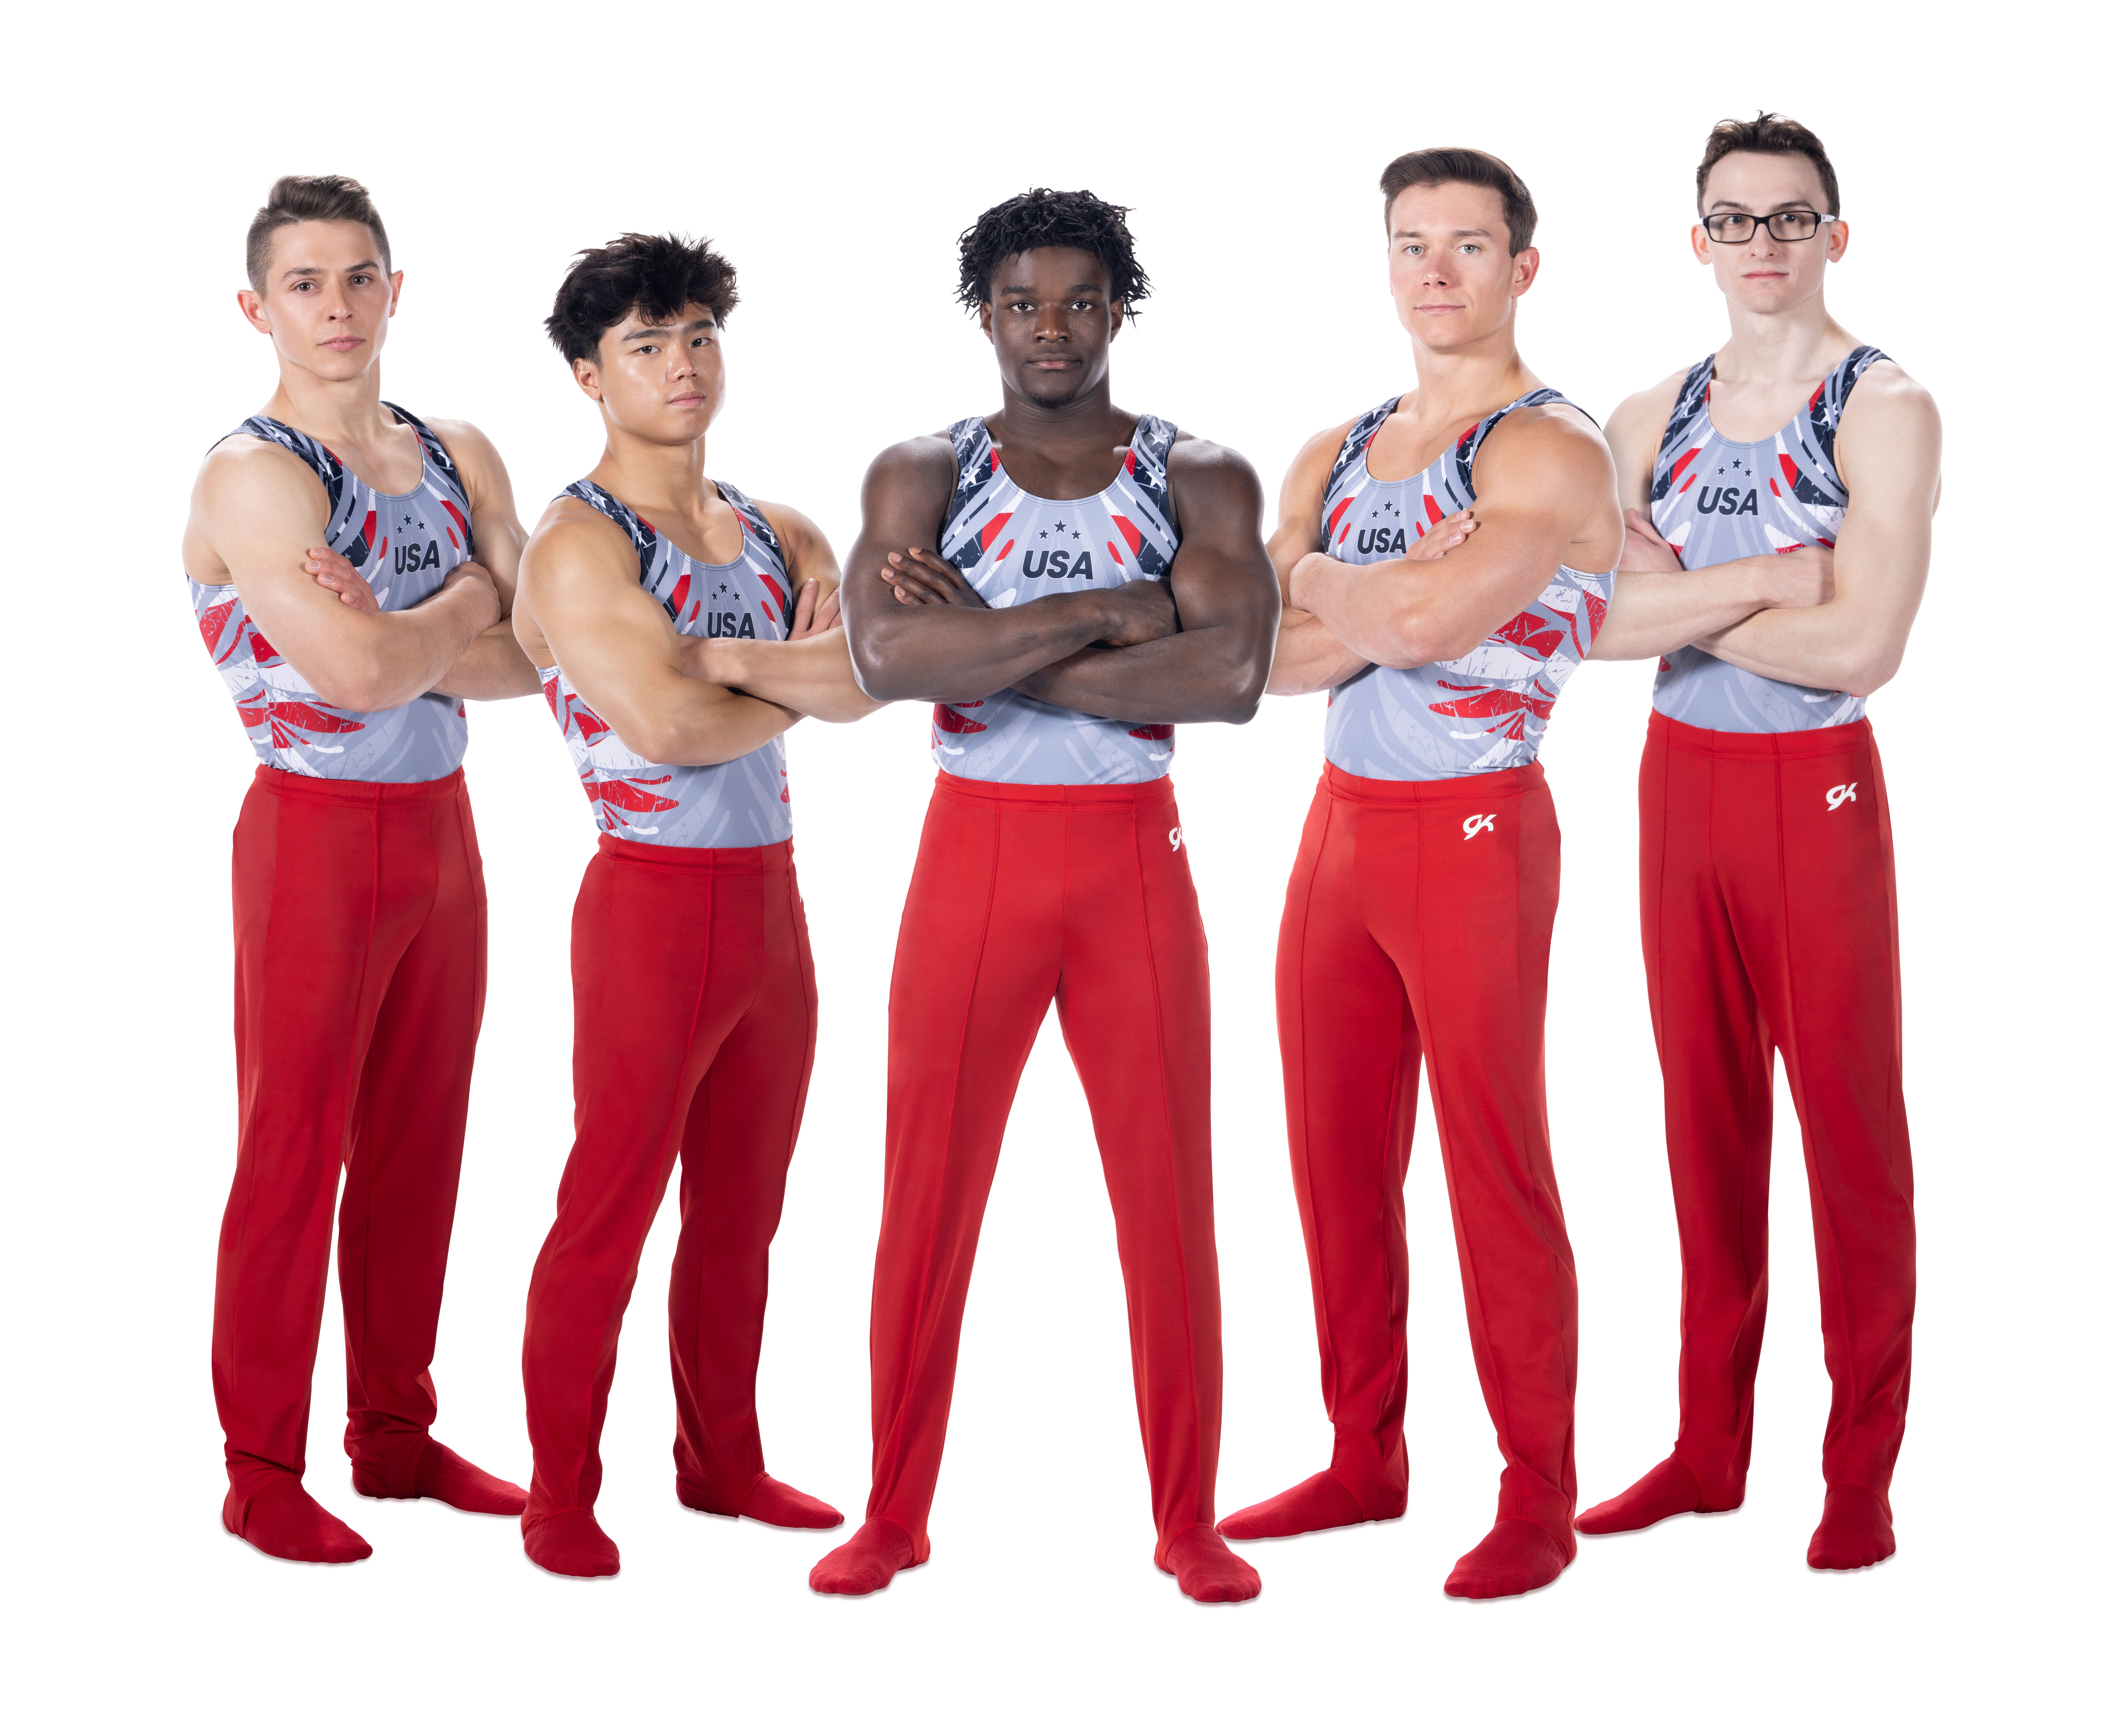 Team USA’s men’s gymnastics final uniforms